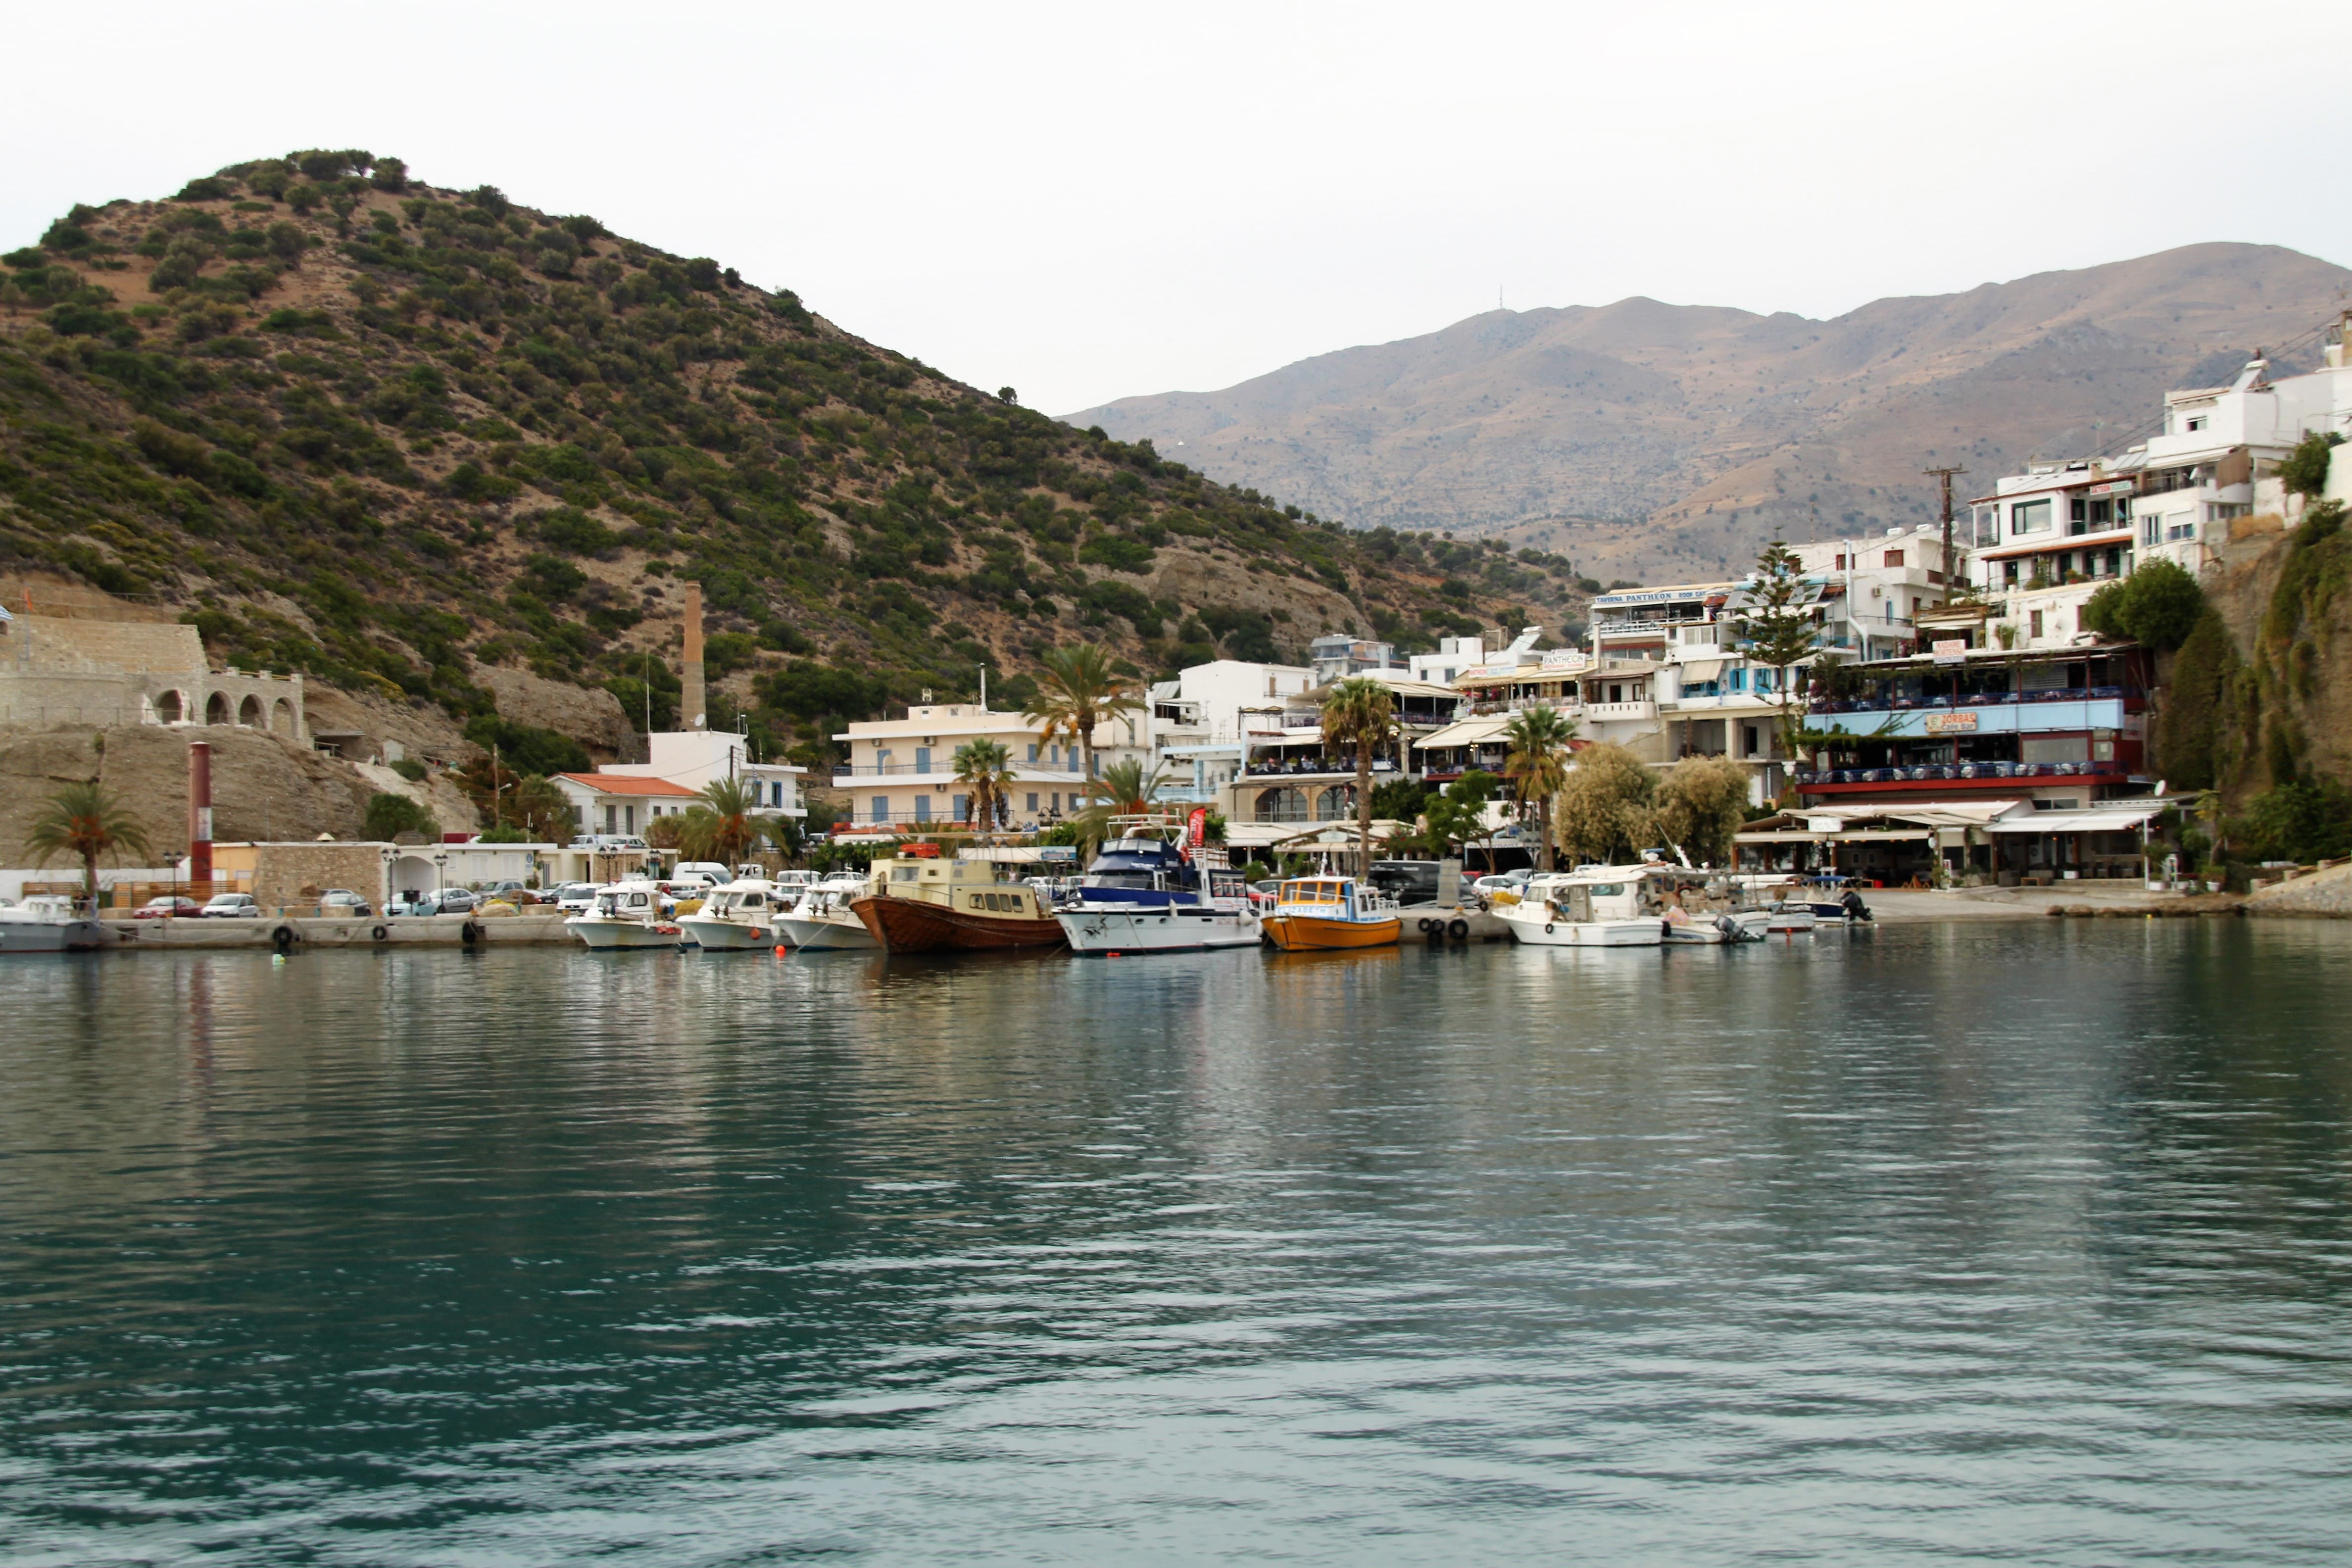 Full Day Experience in Crete Island